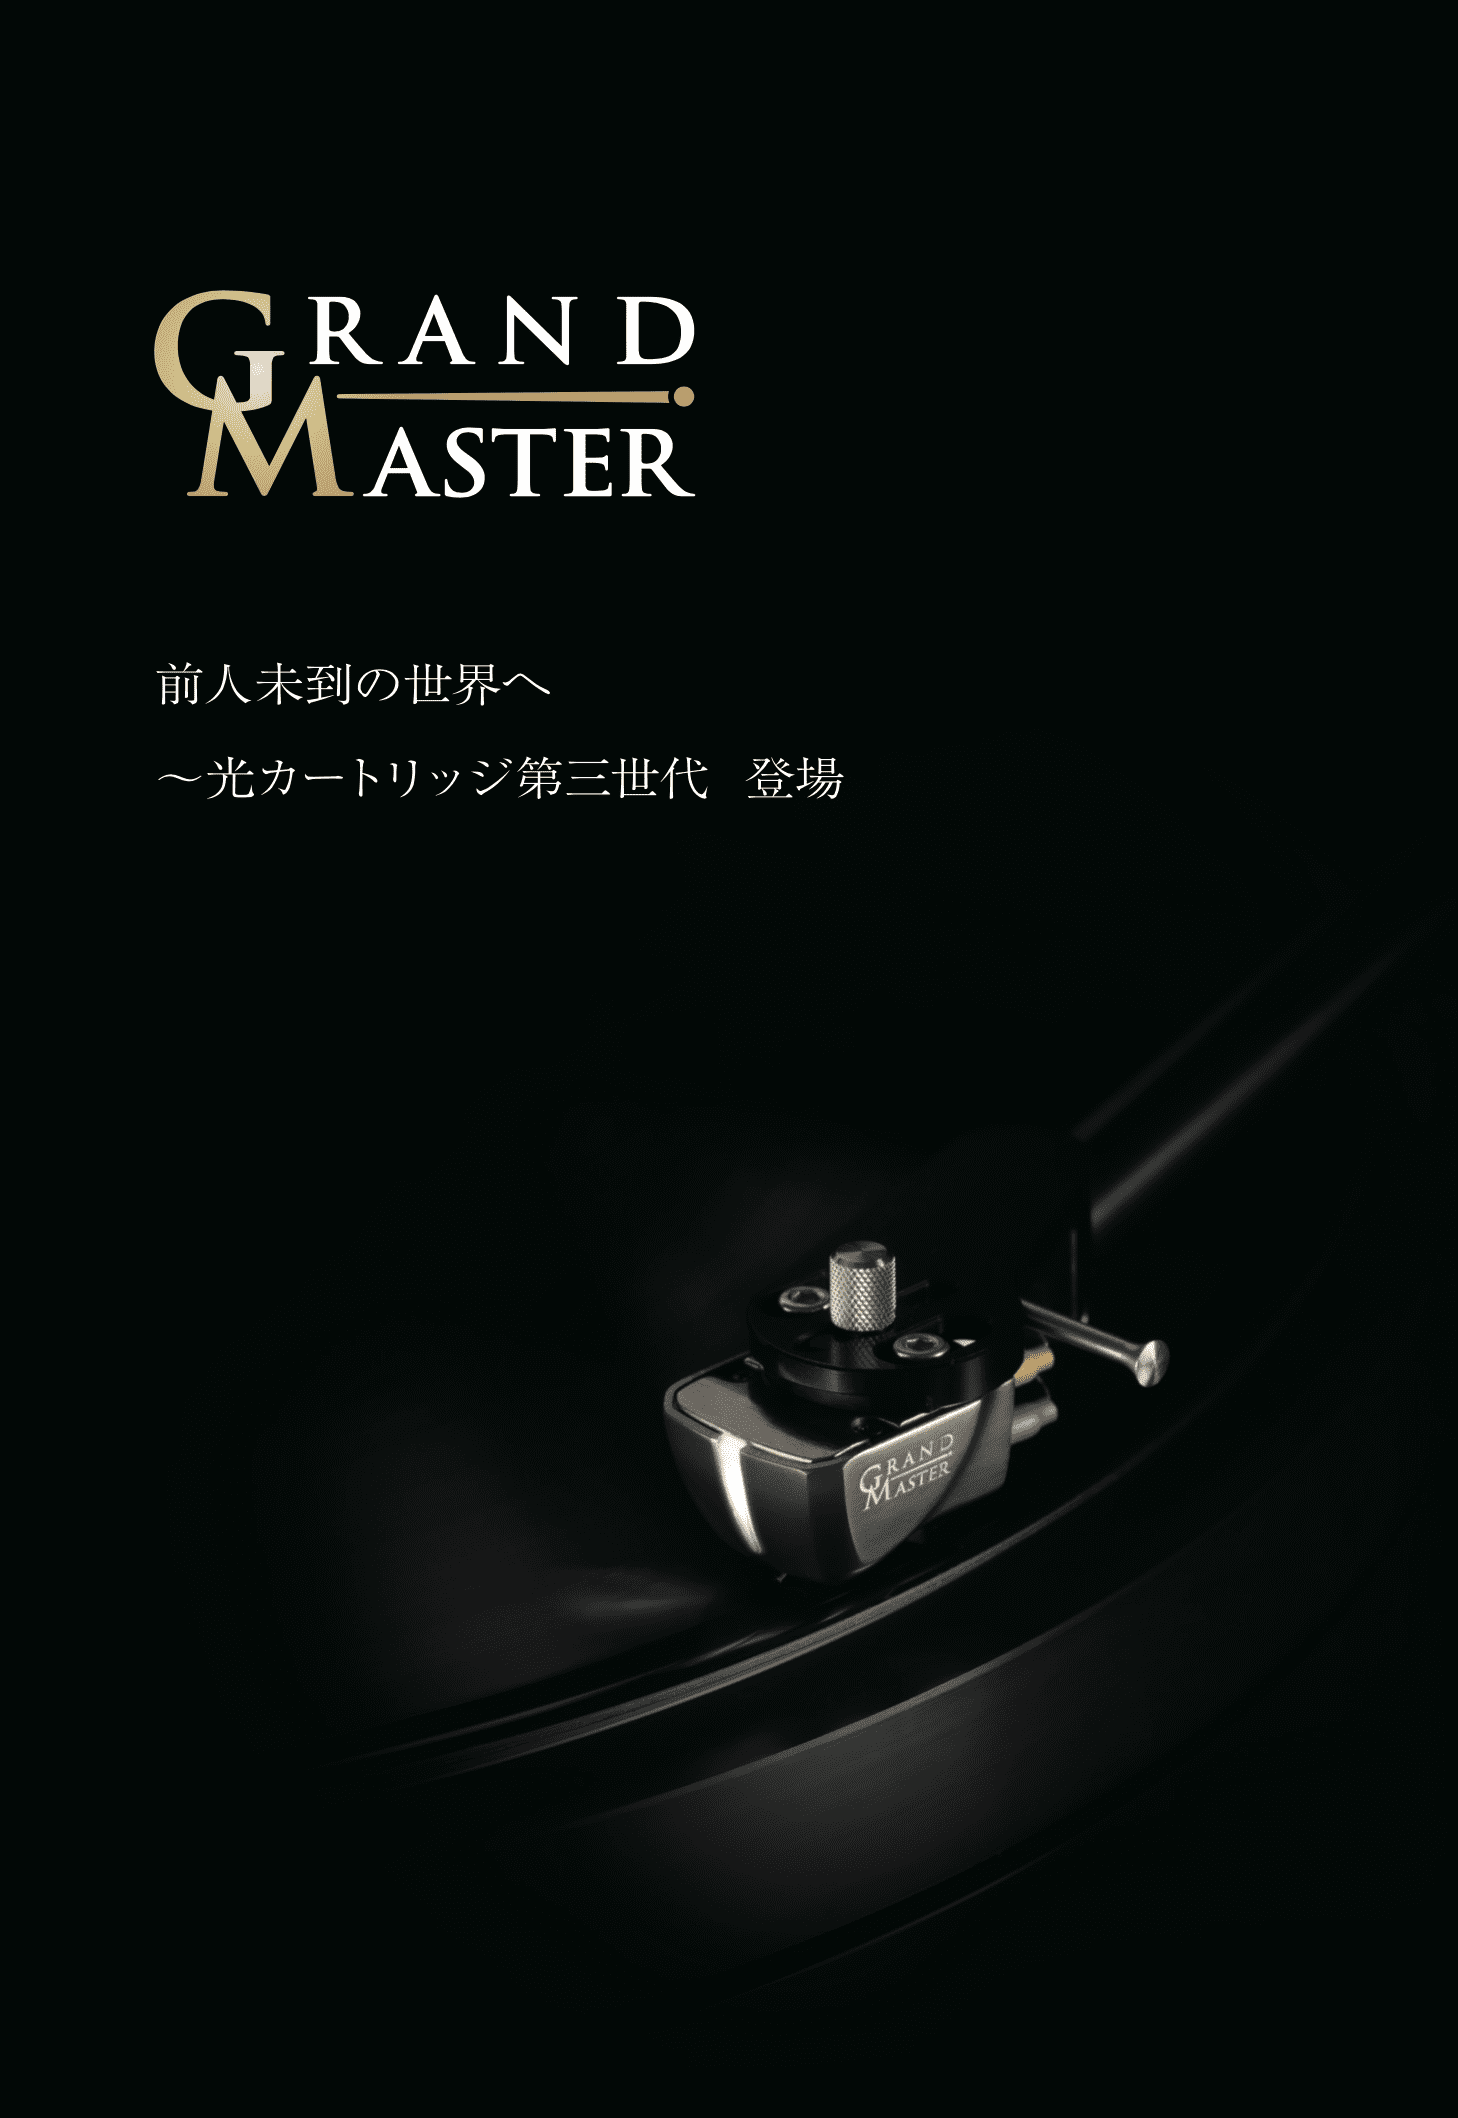 Grand Master brochure